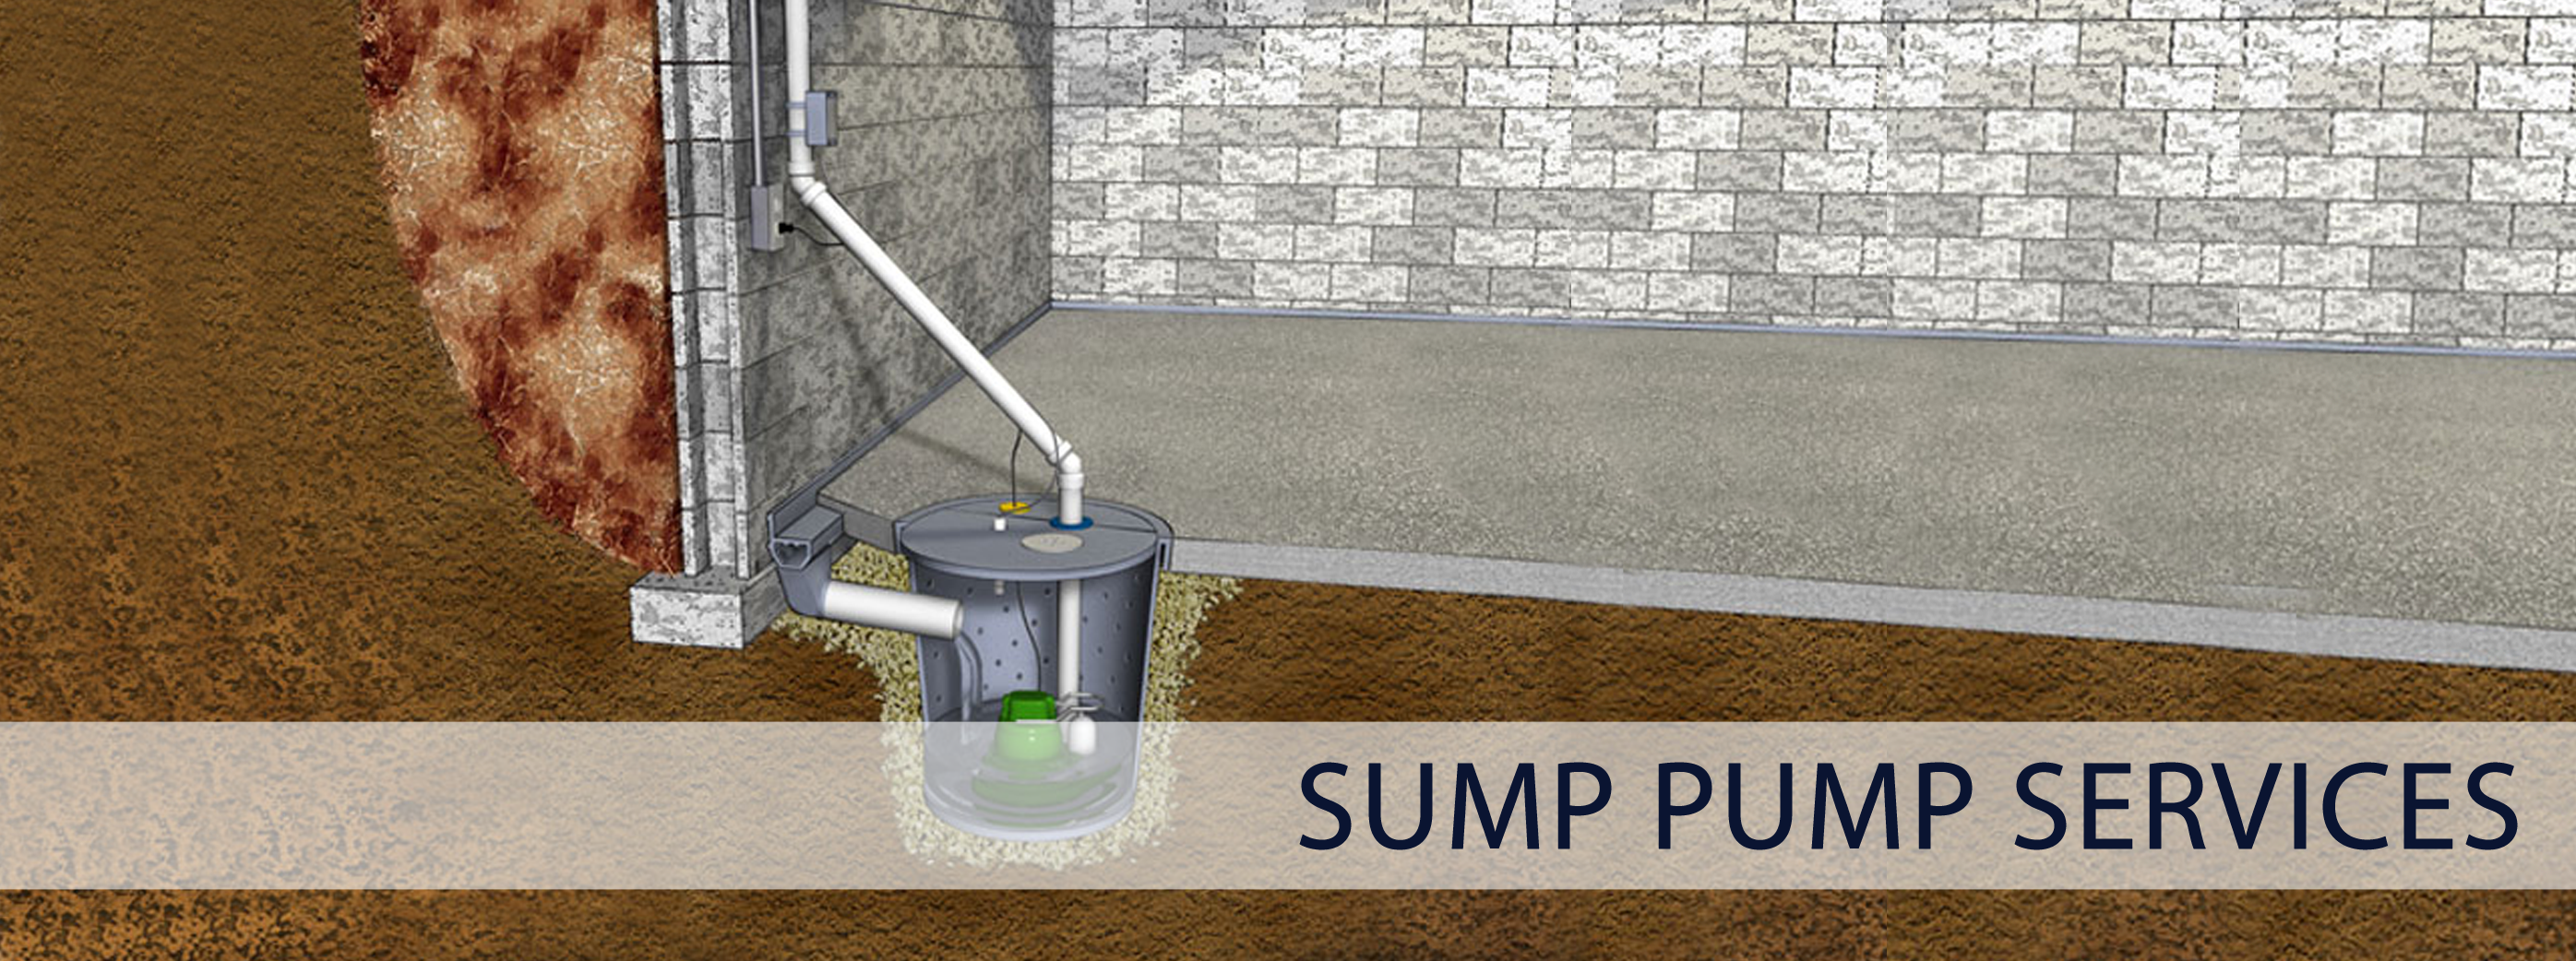 Sump Pump Services